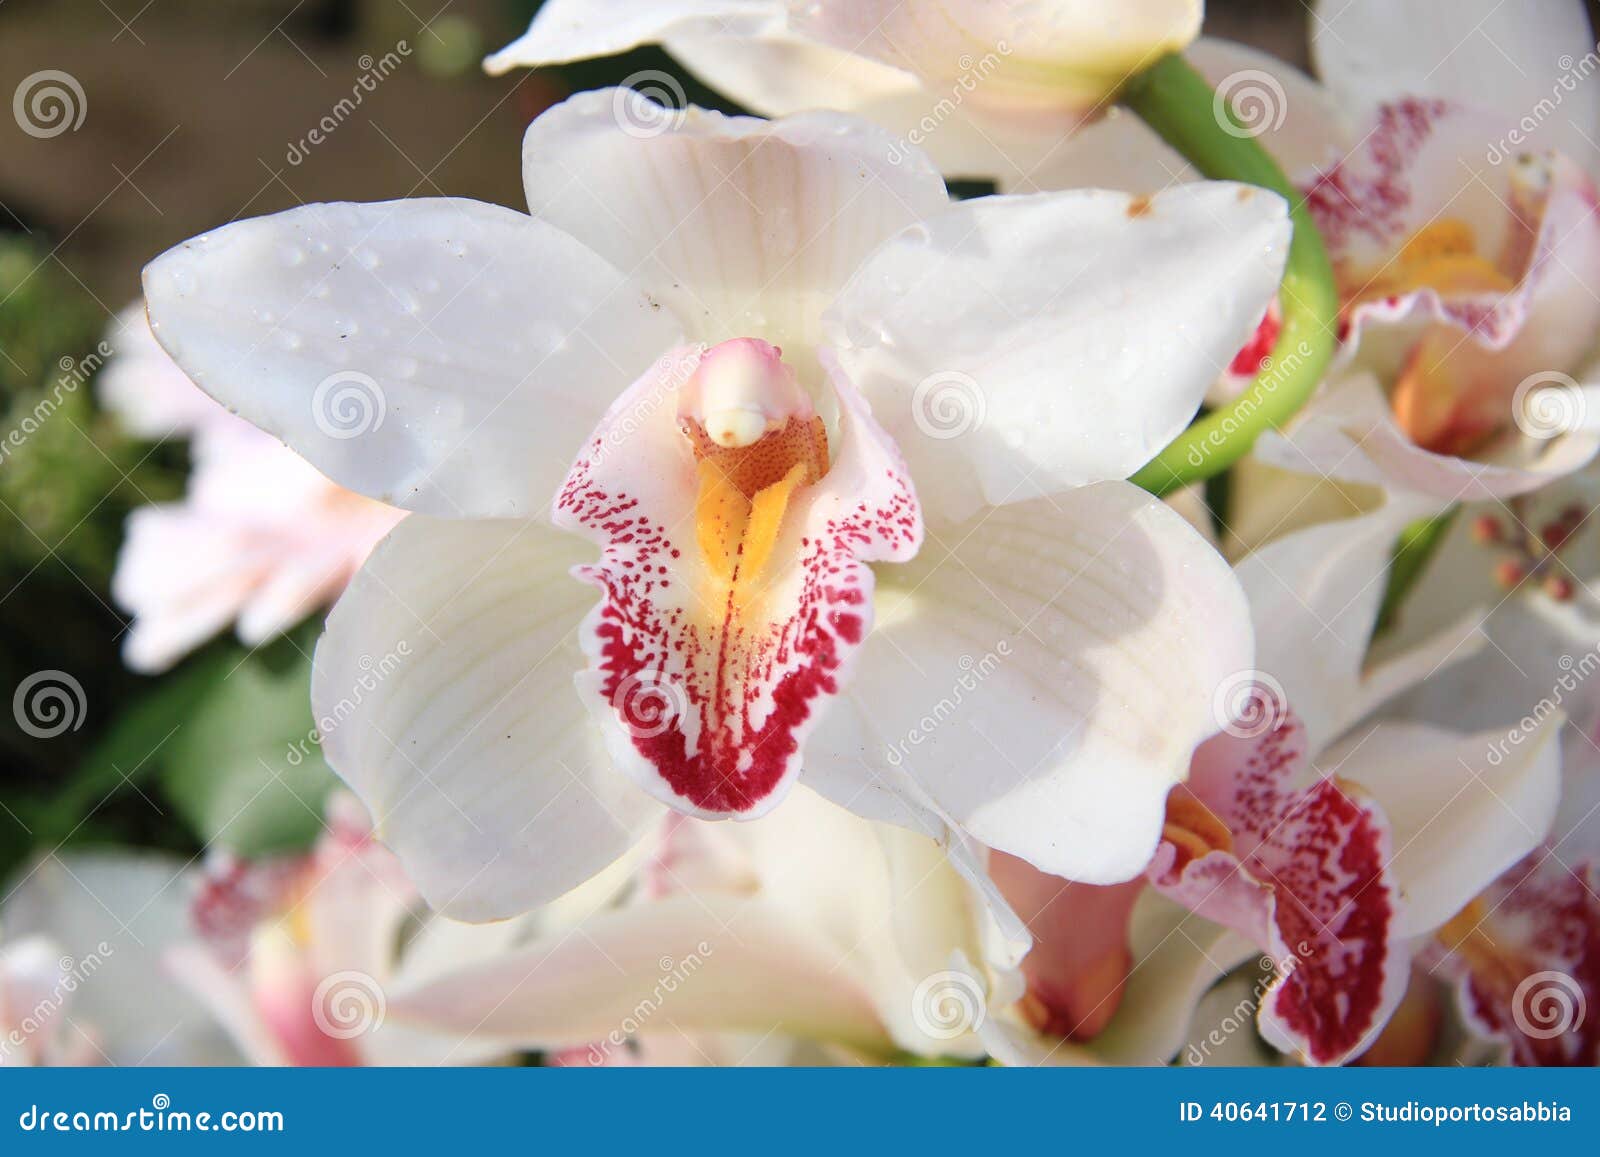 White cymbidium orchids stock photo. Image of arrangement - 40641712